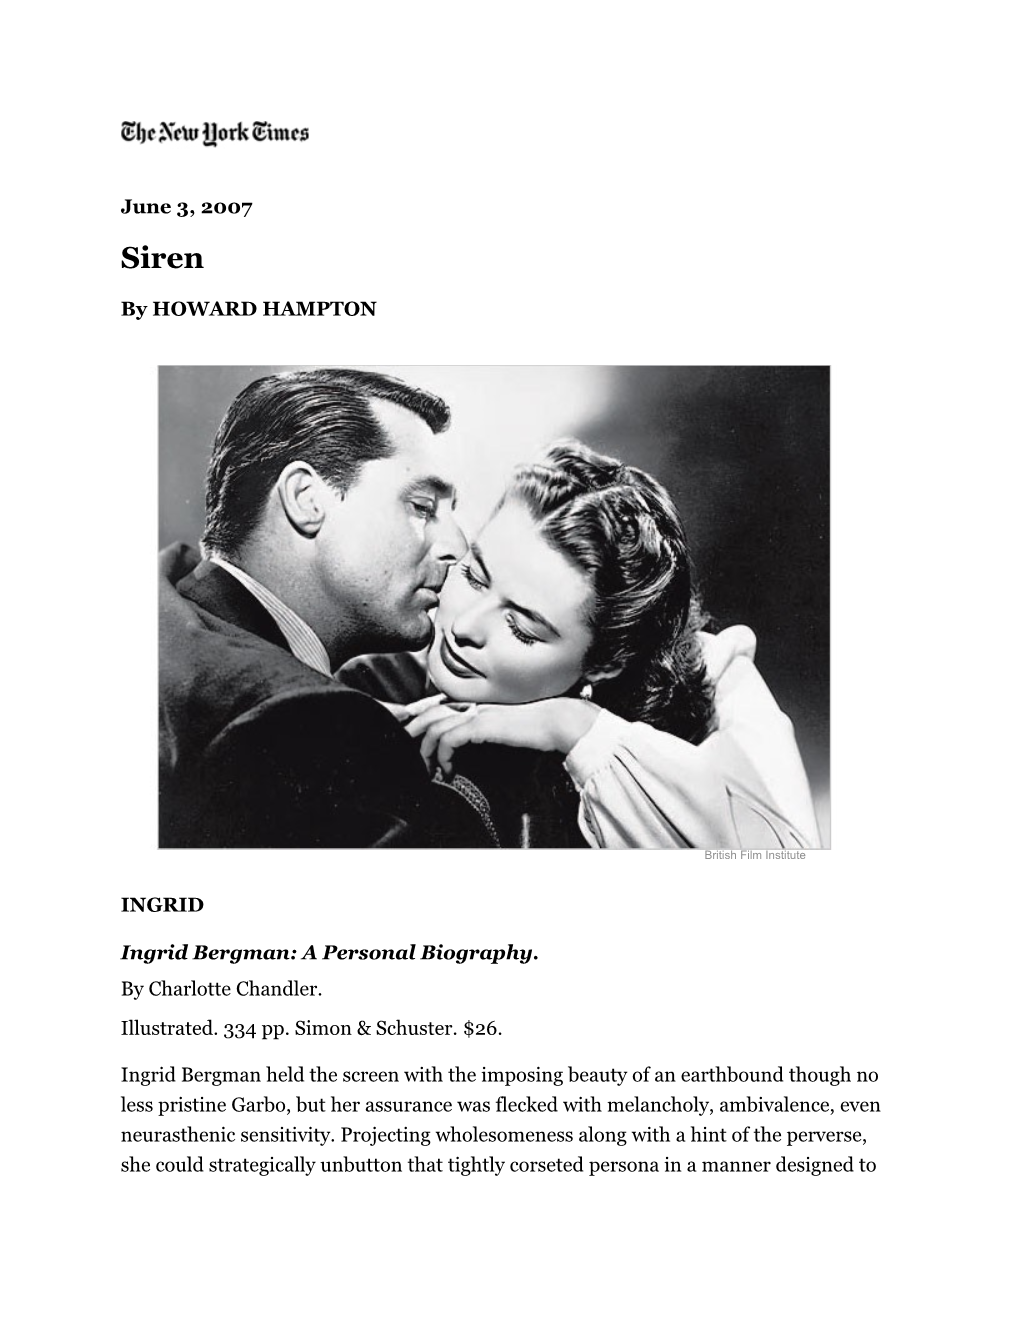 Ingrid Bergman: a Personal Biography